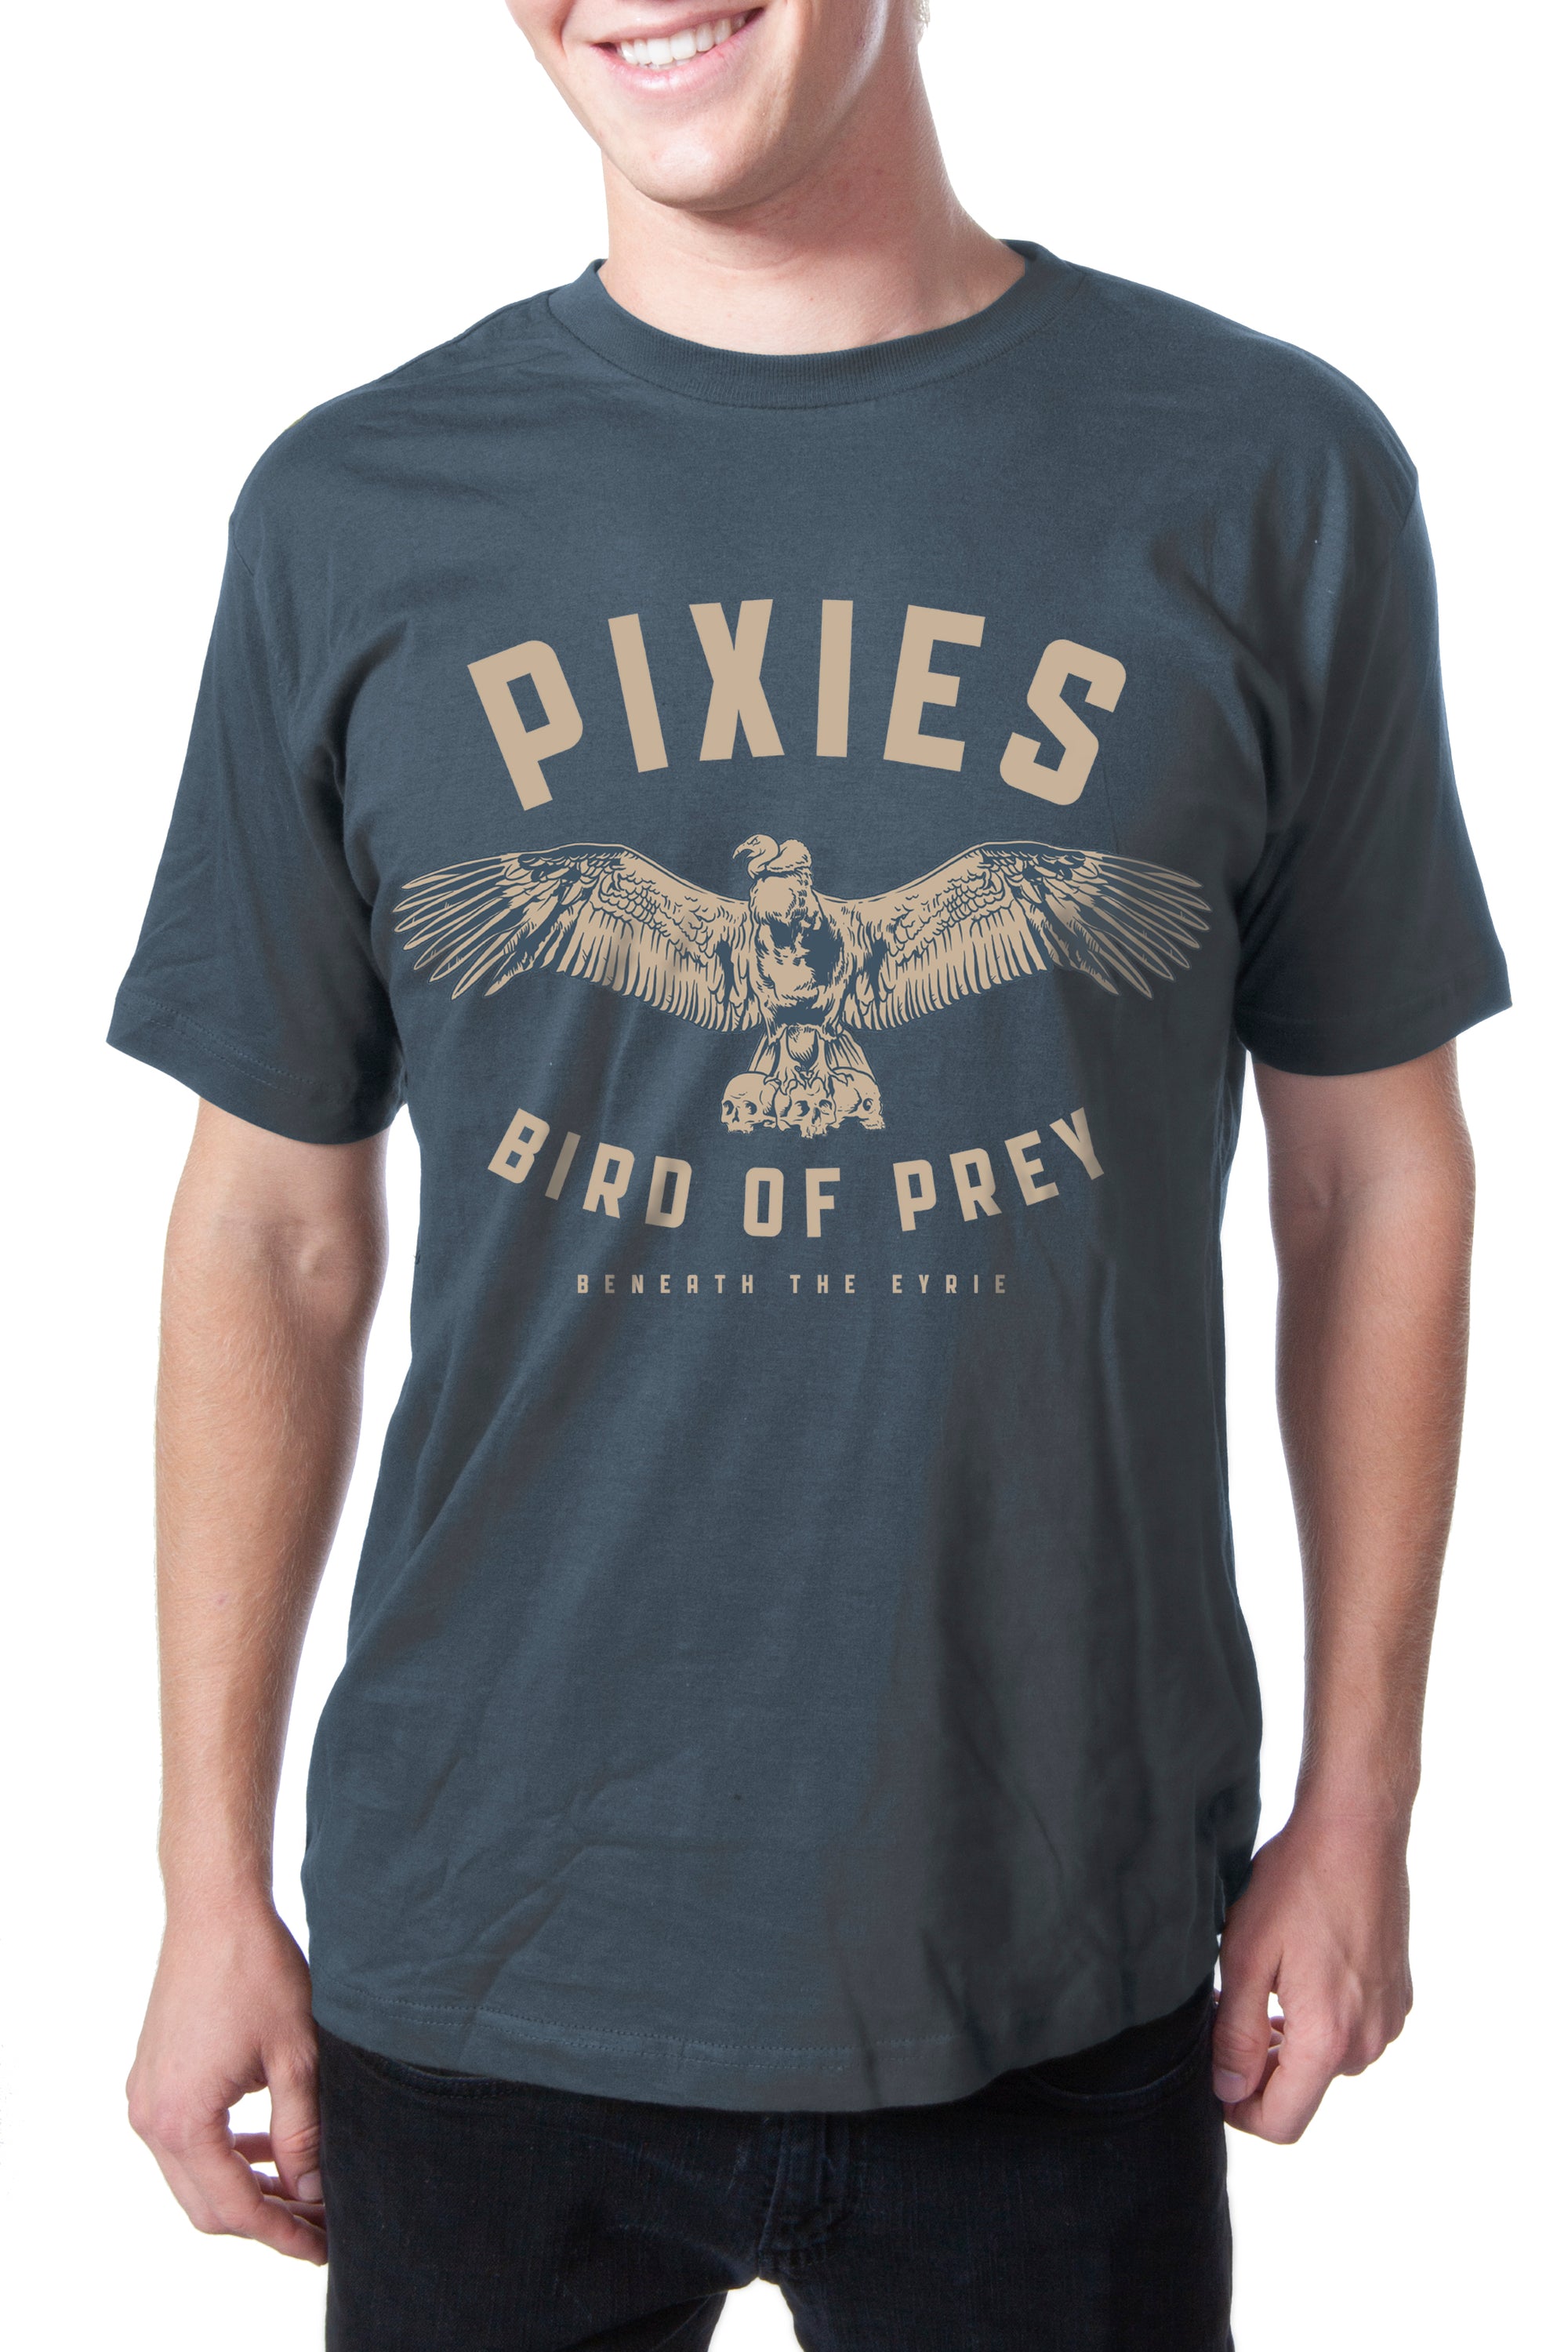 Pixies Bird of Prey Indigo